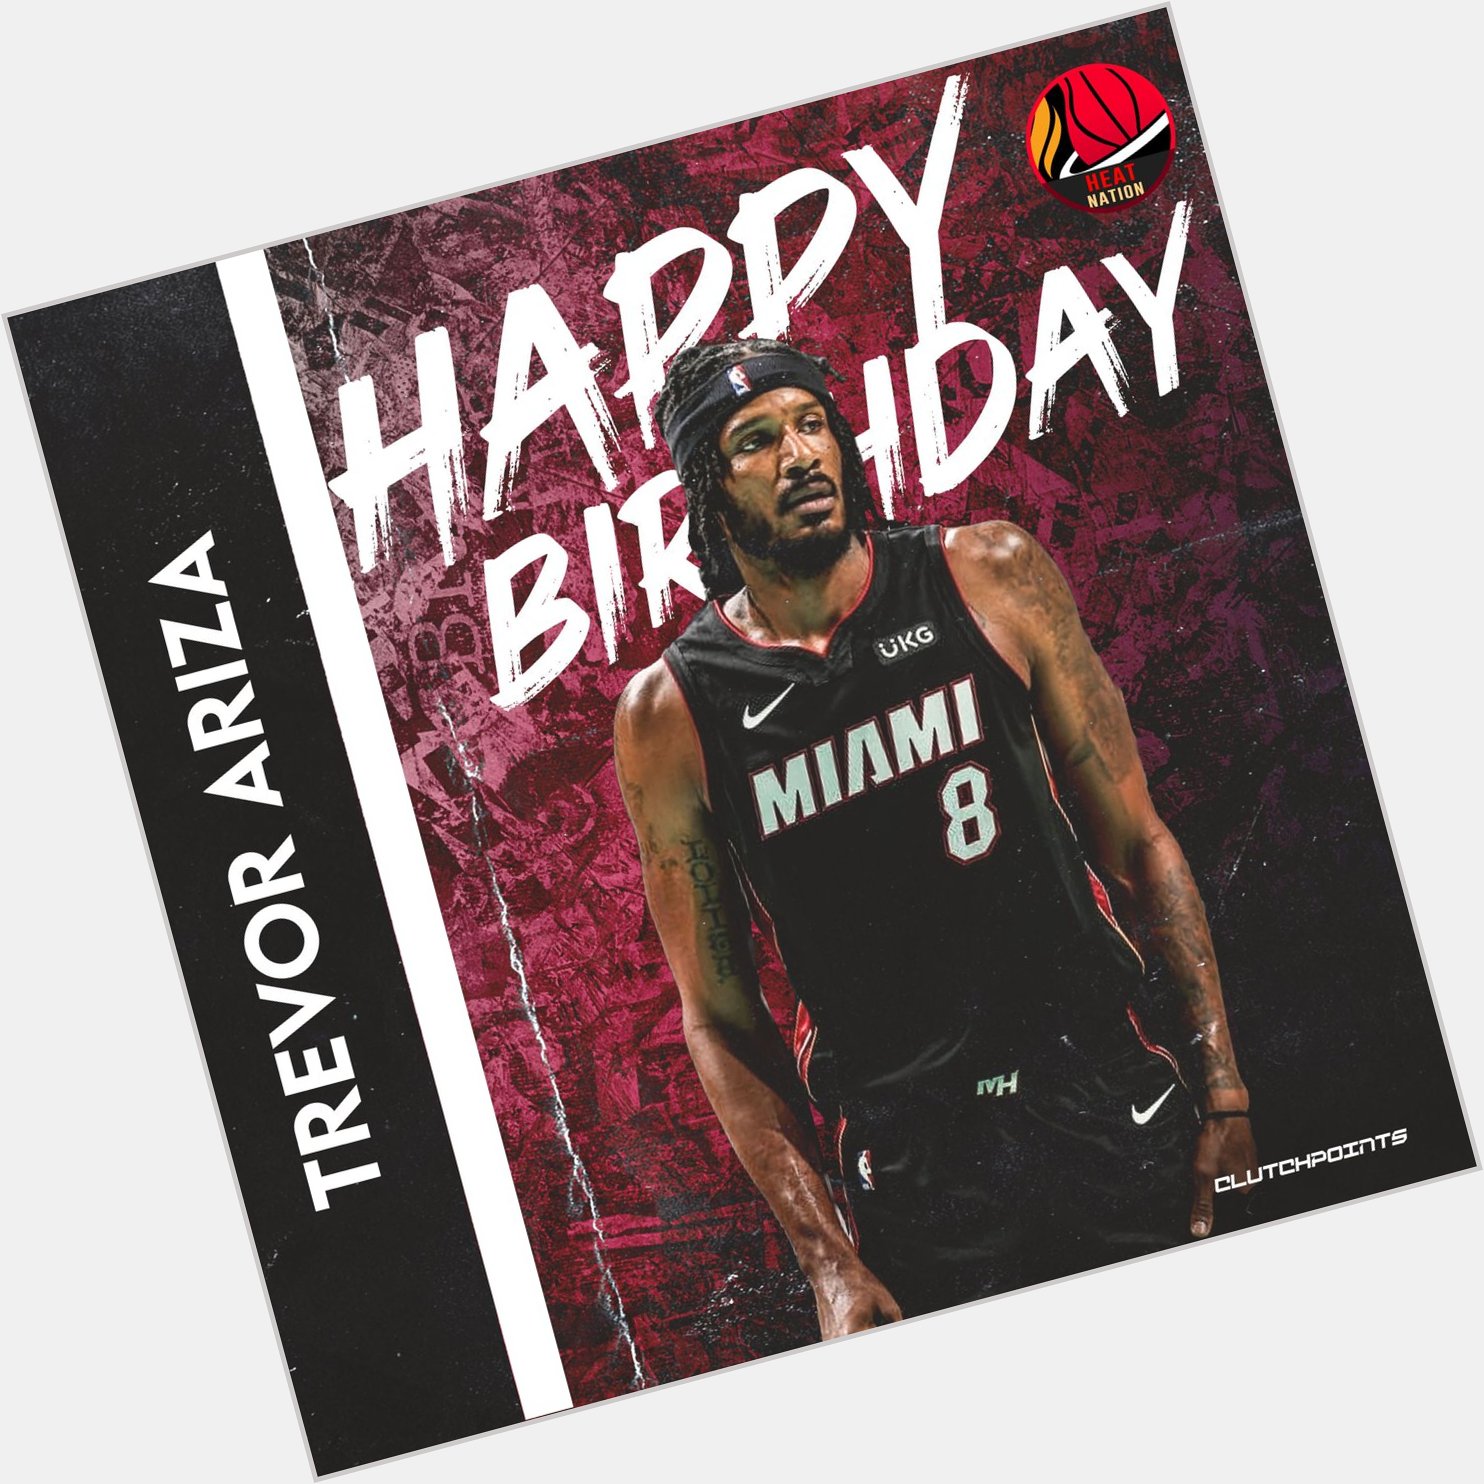 Heat Nation, let\s all greet Trevor Ariza a happy 36th birthday! 